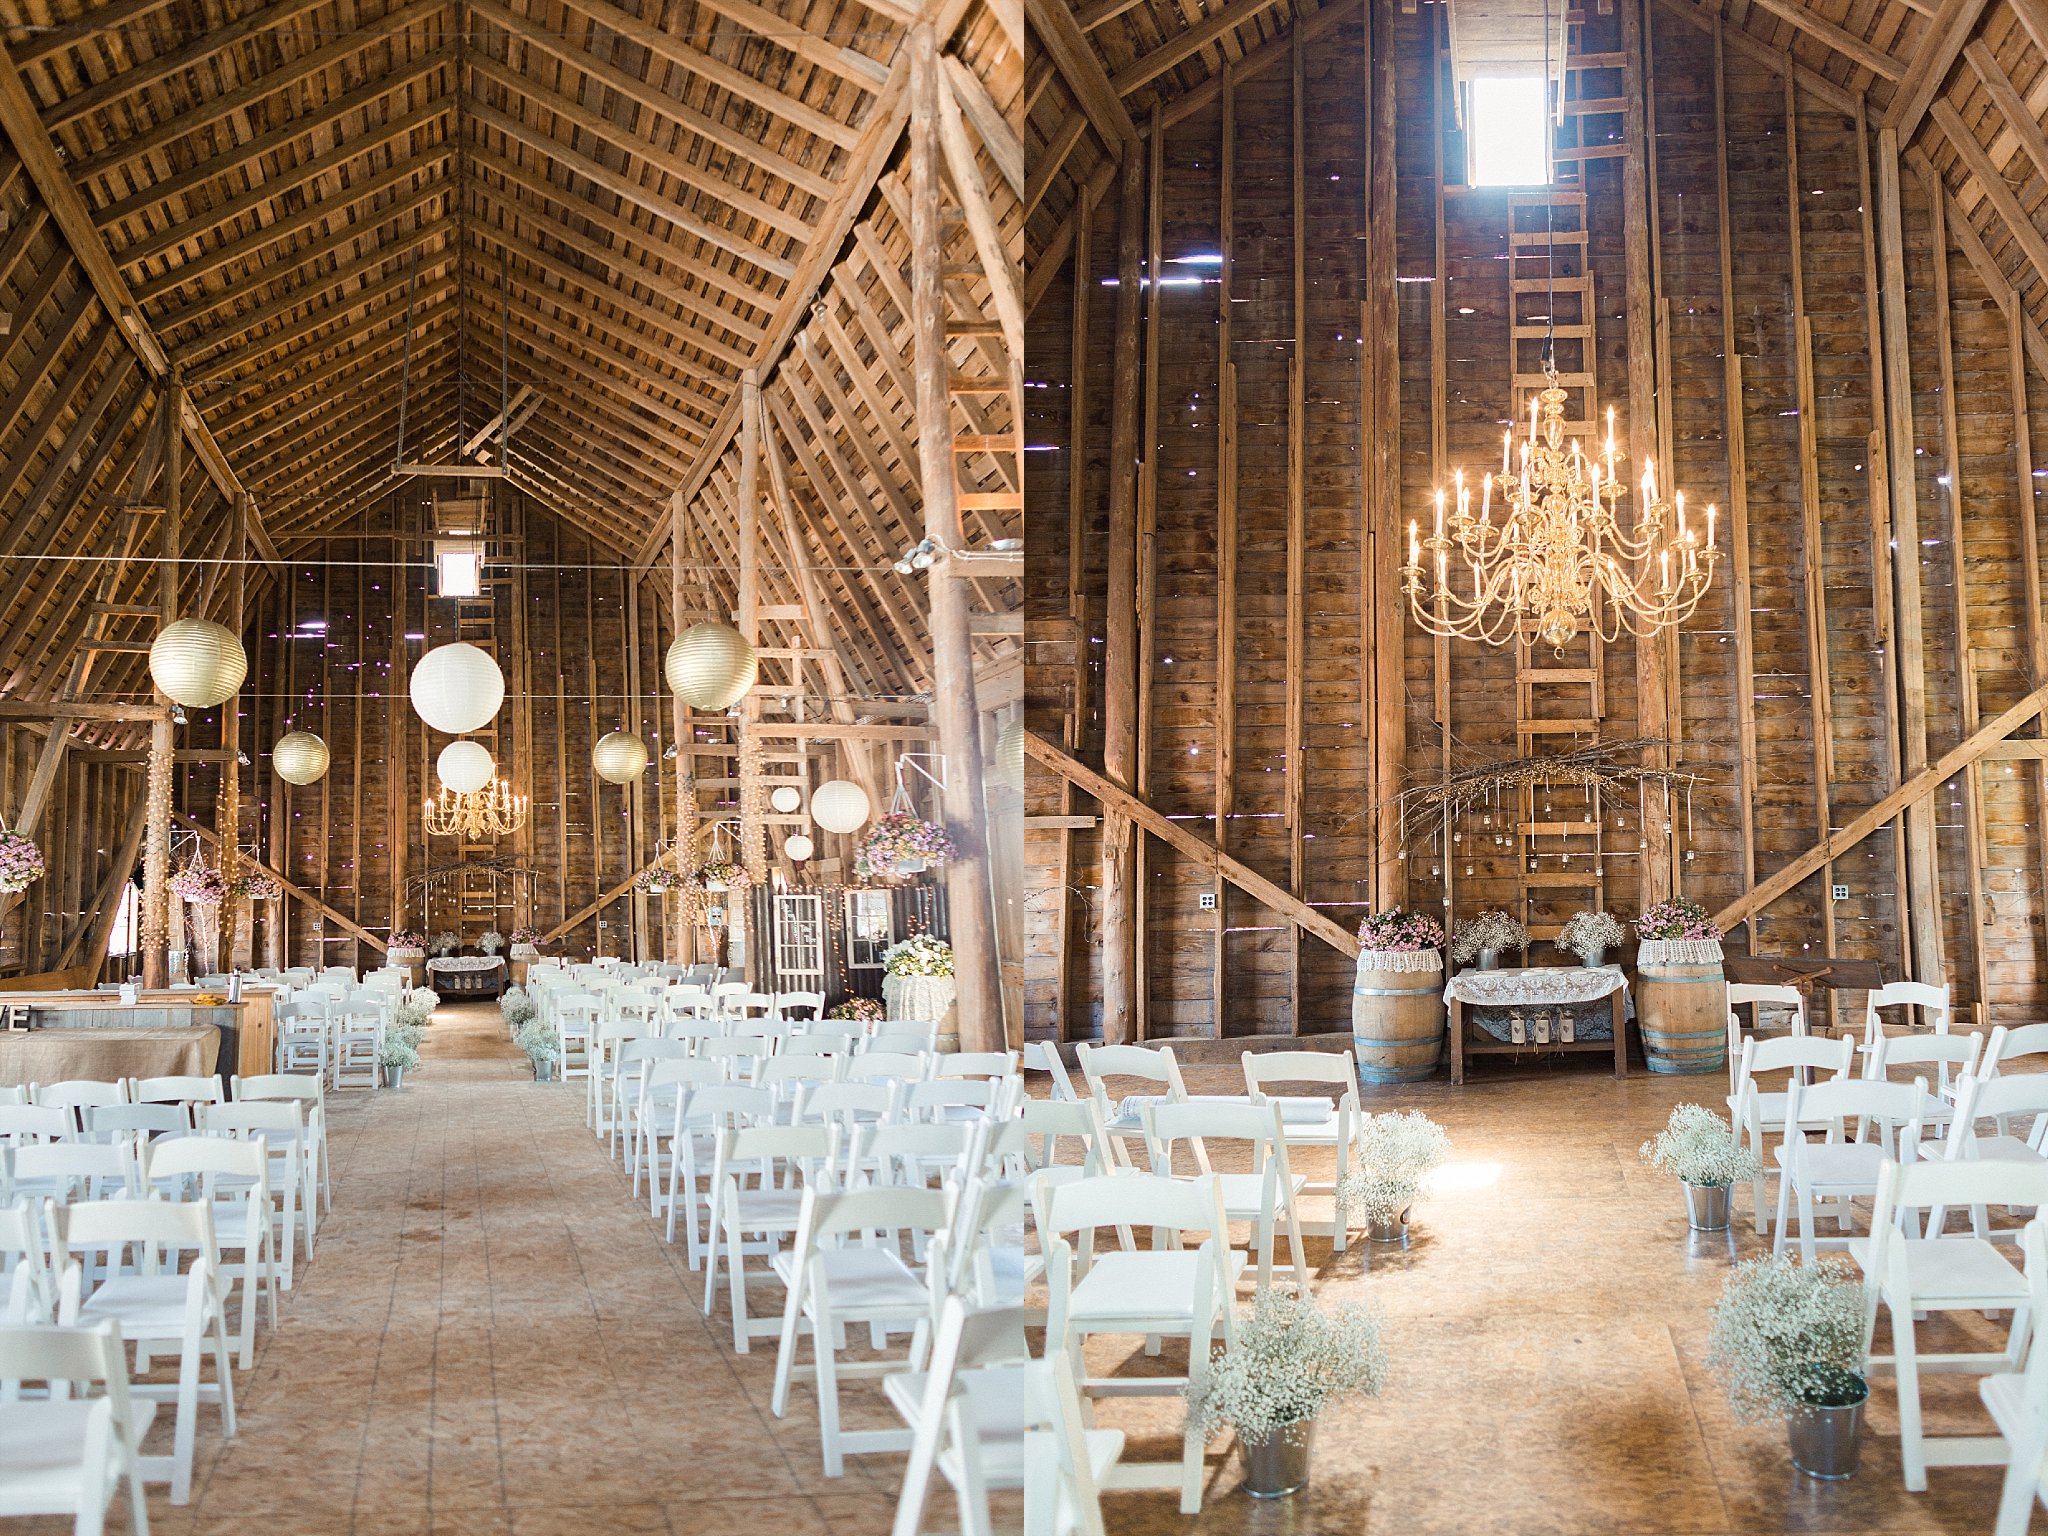 Rustic and romantic farm wedding